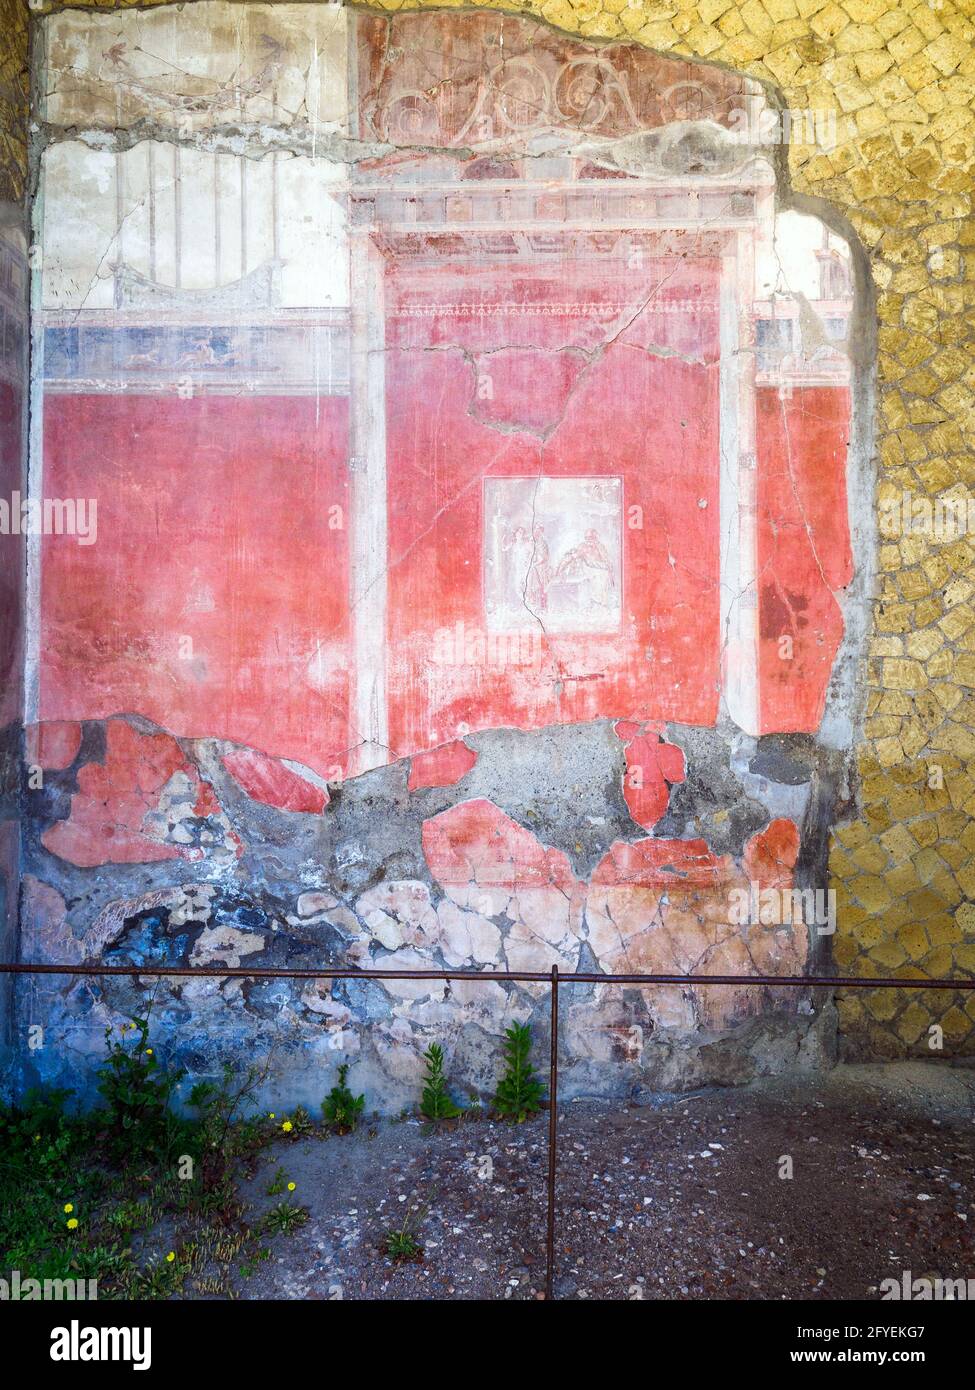 Fresco depicting a Dionysian scene - House of the Great Portal (Casa del Gran Portale) - Herculaneum ruins, Italy Stock Photo